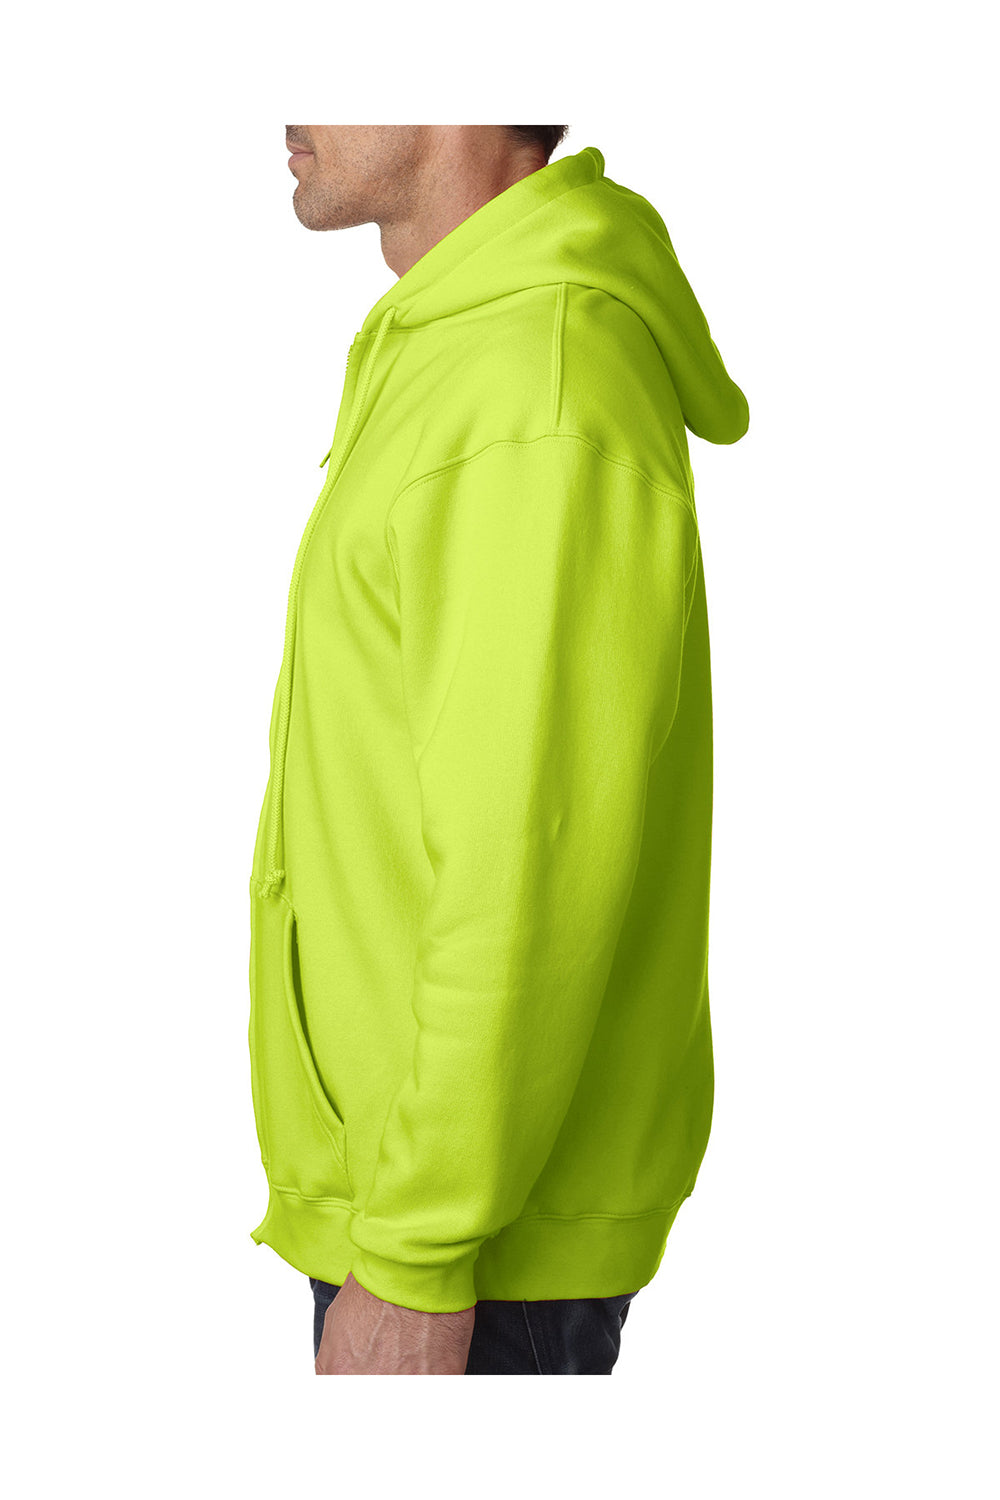 Bayside BA900 Mens USA Made Full Zip Hooded Sweatshirt Hoodie Lime Green Model Side